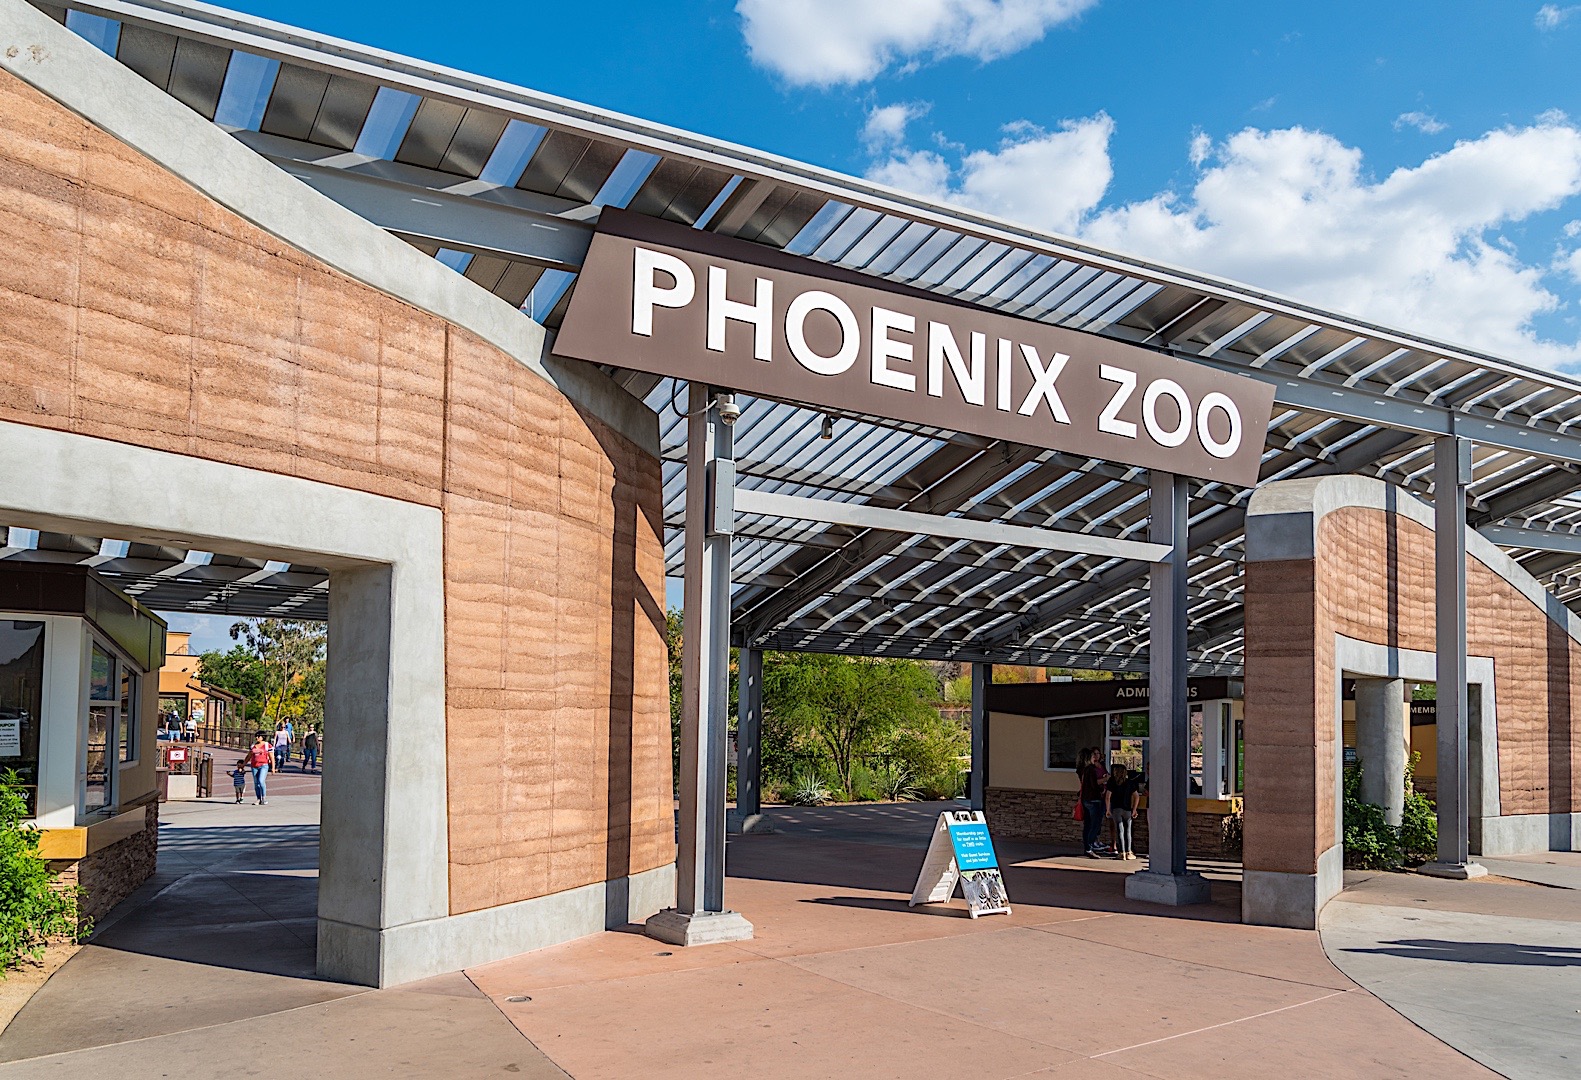 The Phoenix Zoo is nearby